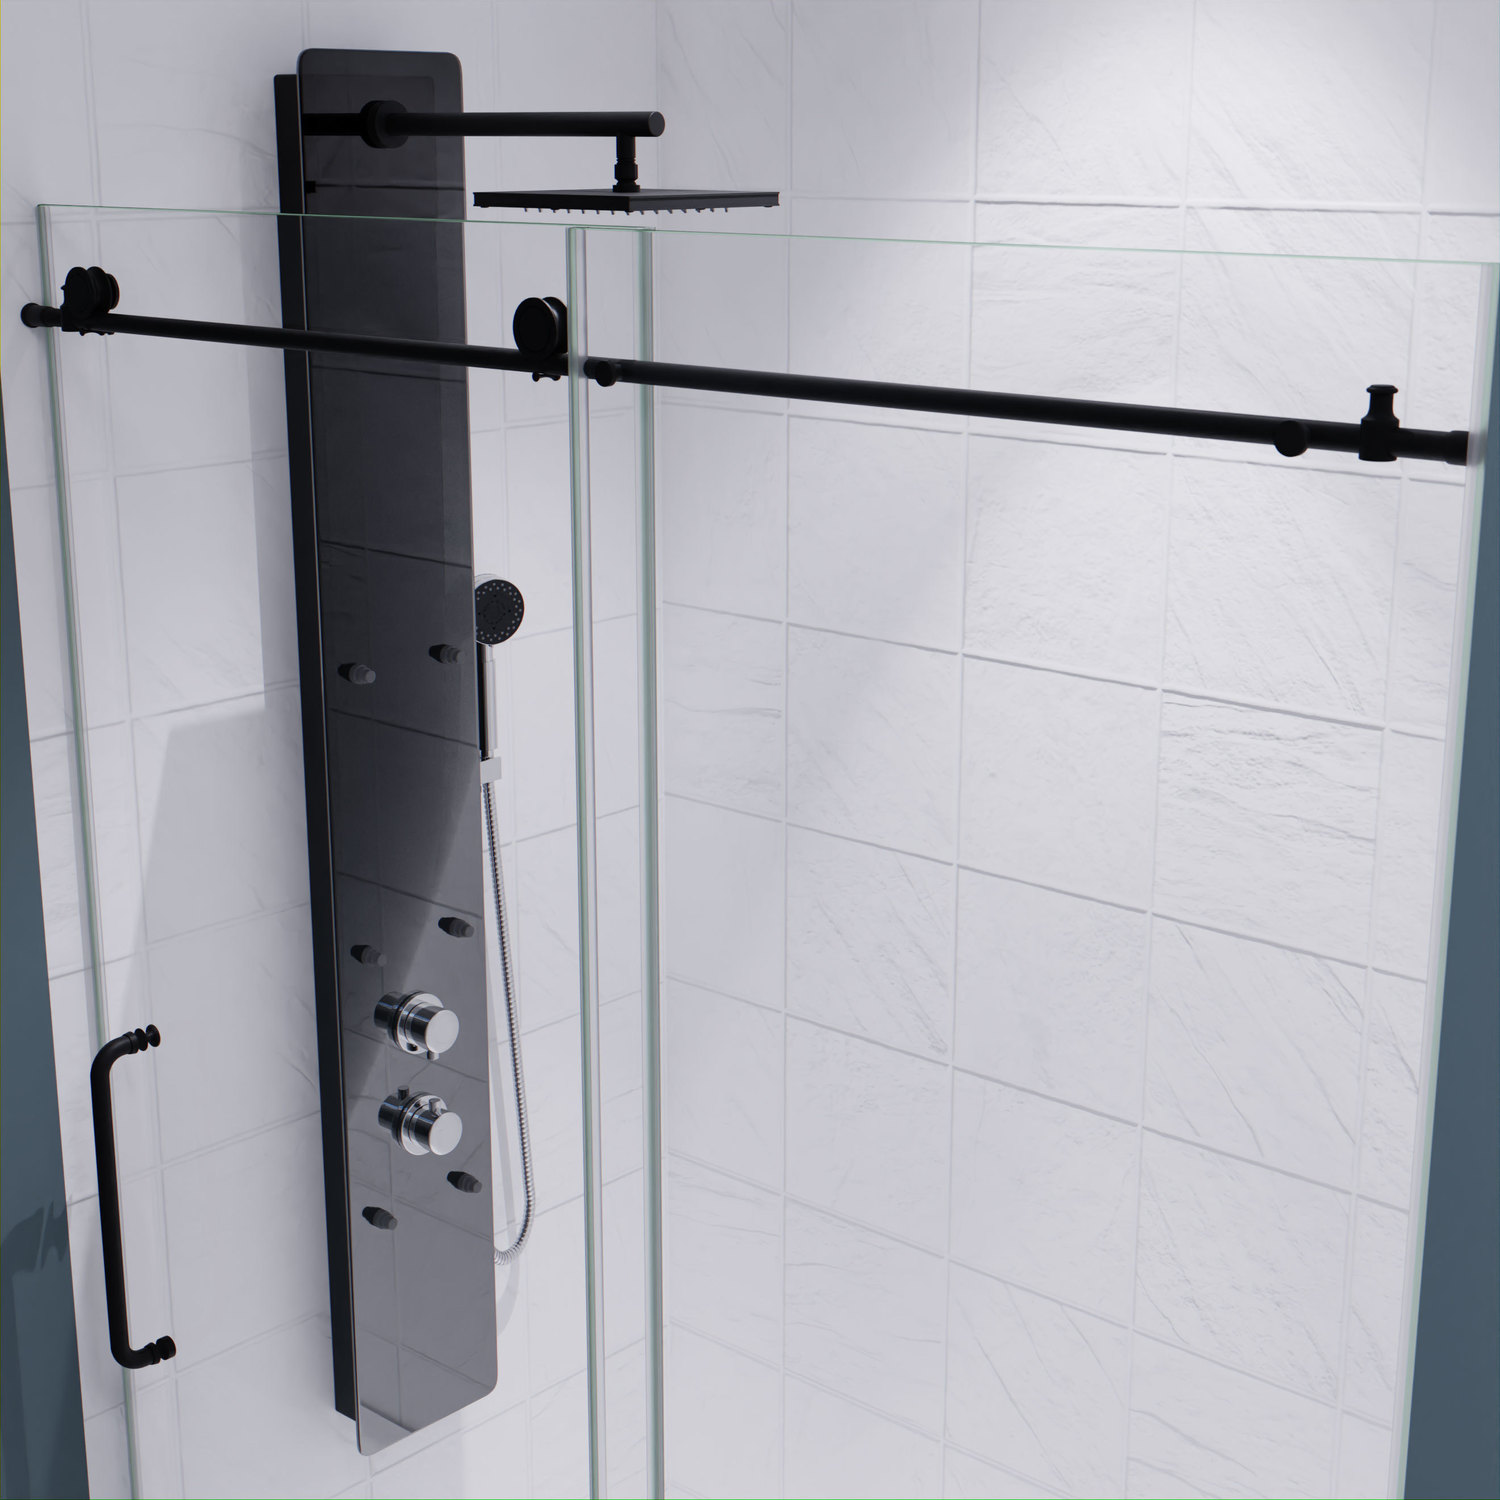 clear glass bathtub doors Anzzi SHOWER - Shower Doors - Sliding Black